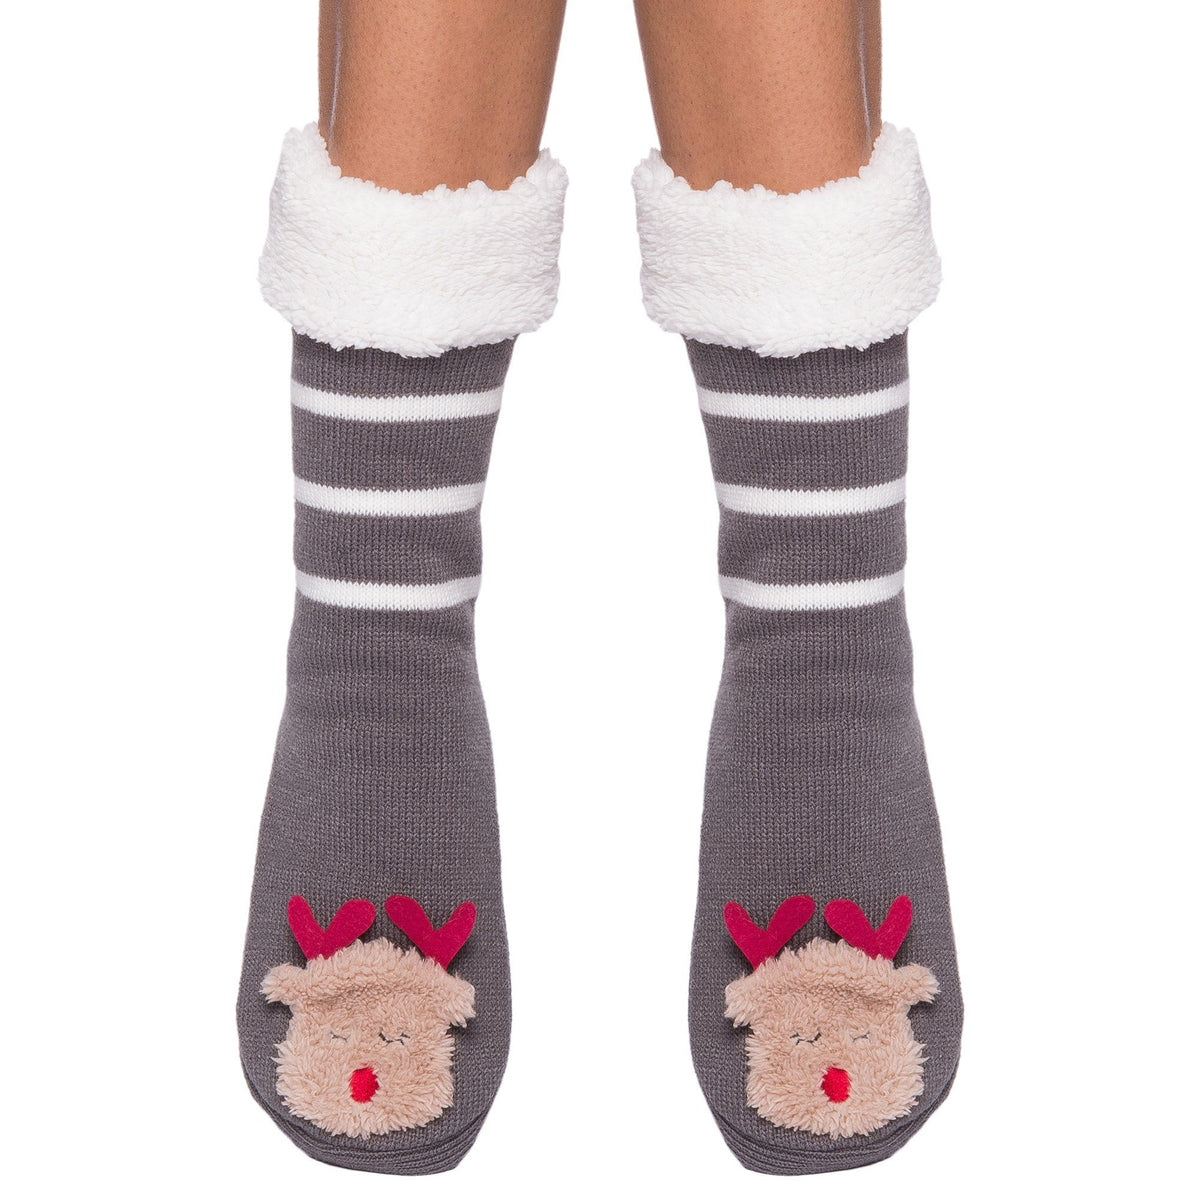 Women's Cute Knit Animal Face Slipper Socks - Reindeer Charcoal